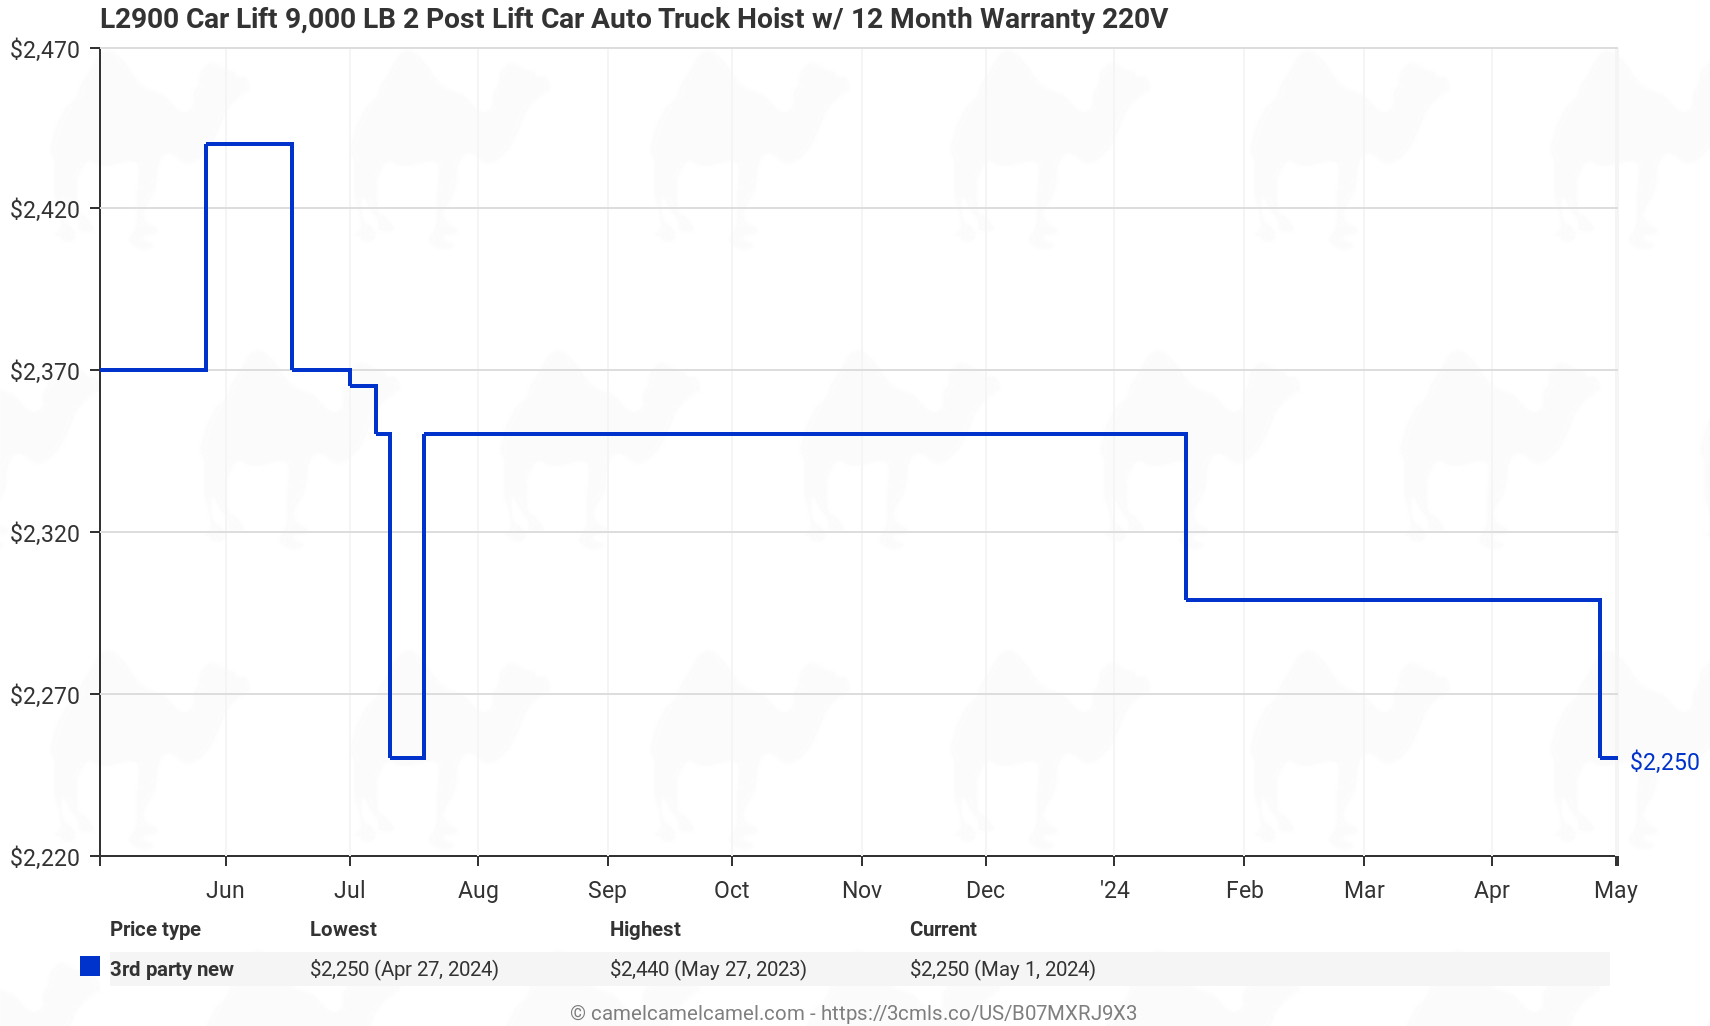 XK L2900 Car Lift 9,000 LB 2 Post Lift Car Auto Truck Hoist w/12 Month Warranty 220V - Price History: B07MXRJ9X3